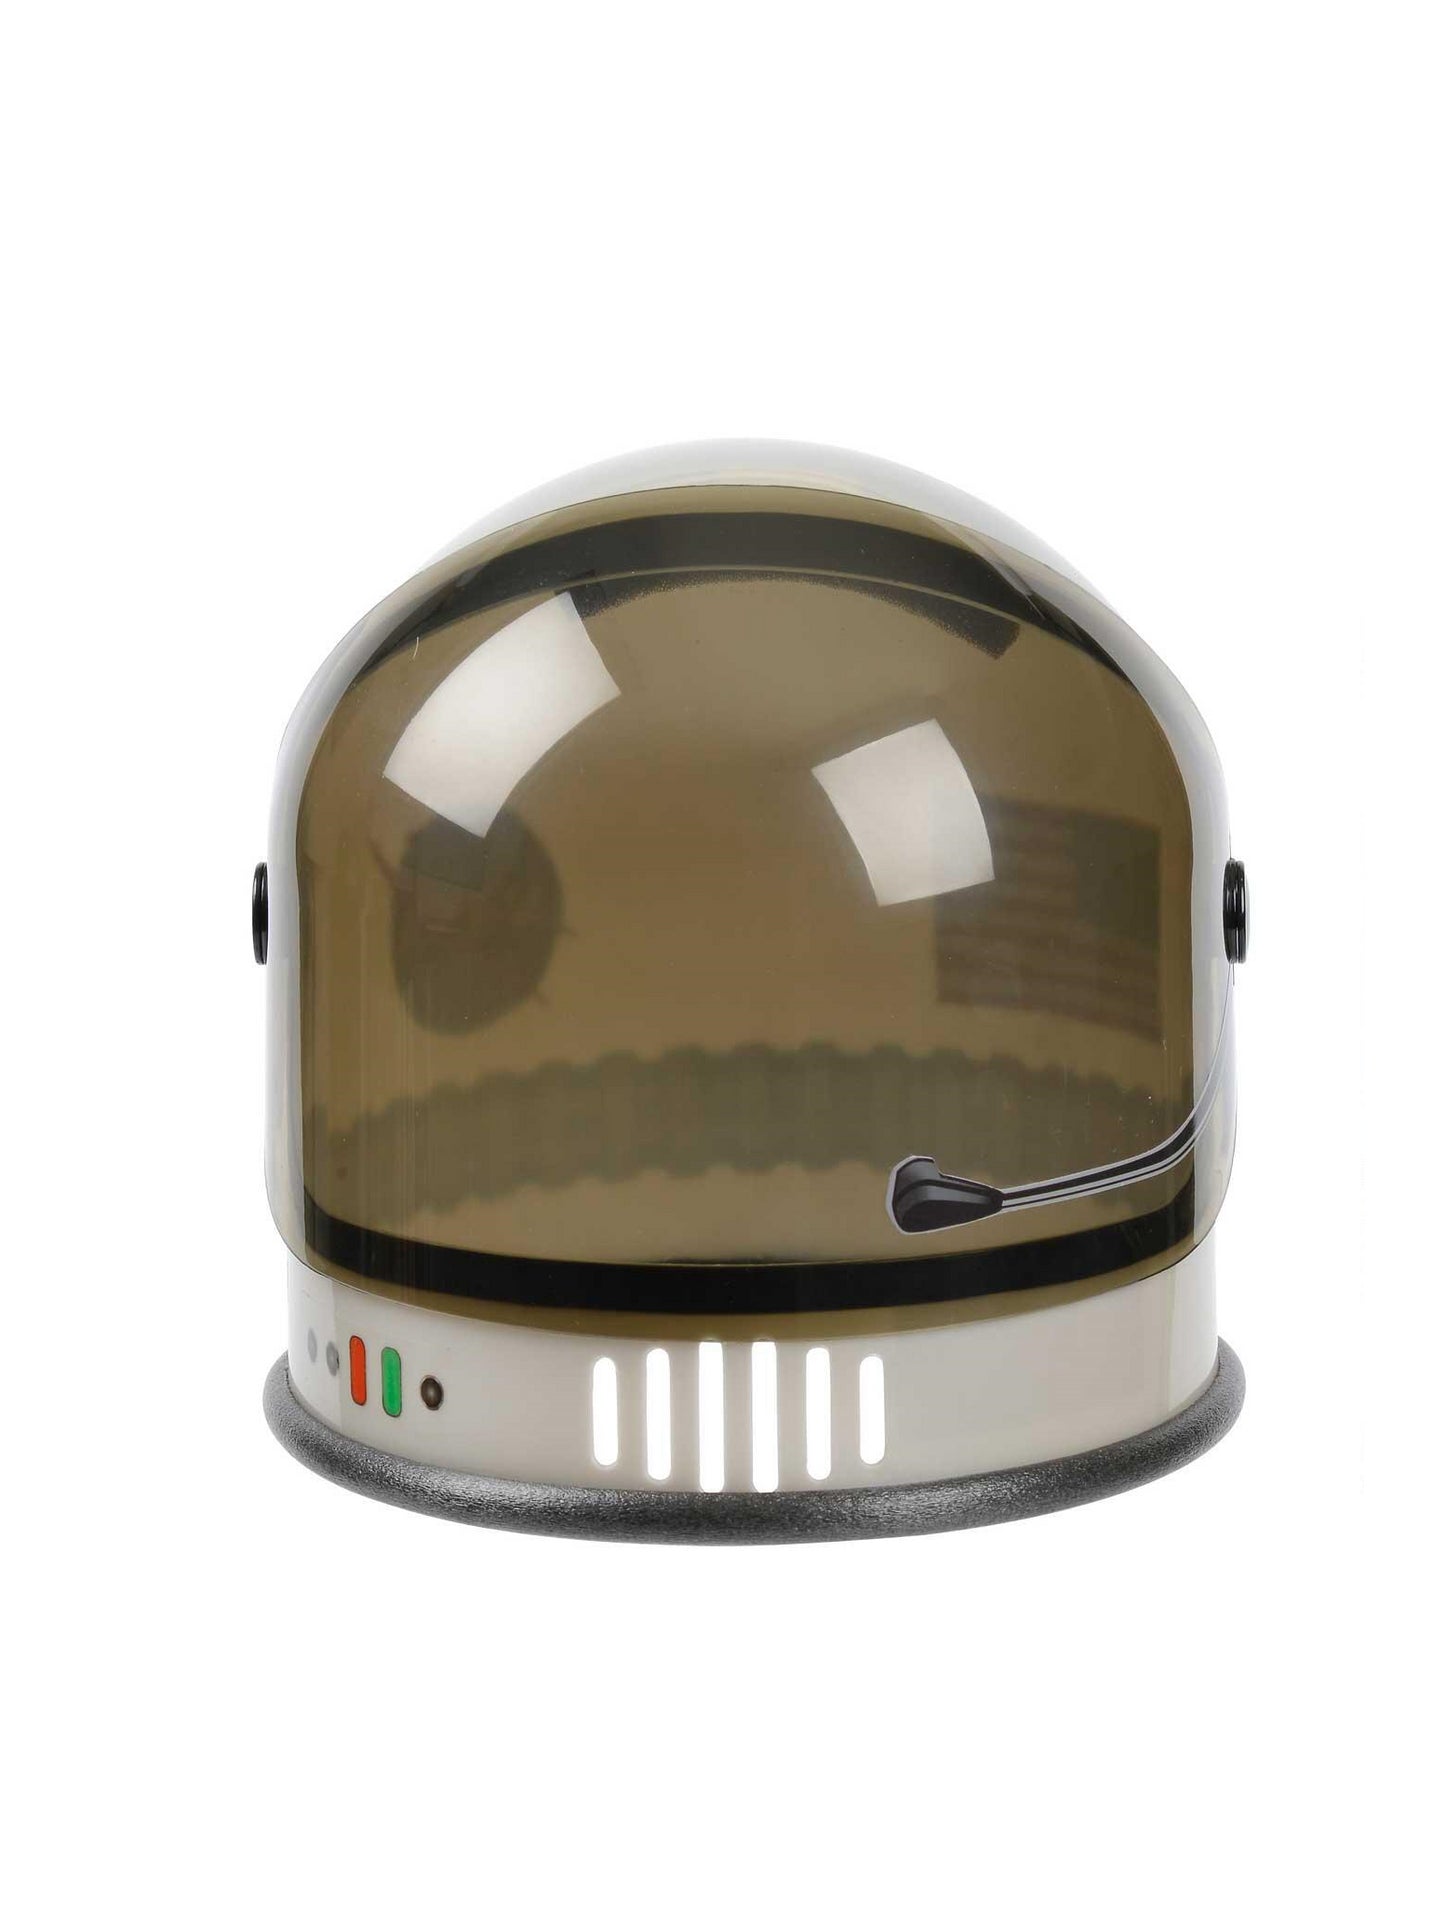 Silver NASA Astronaut Helmet for Kids